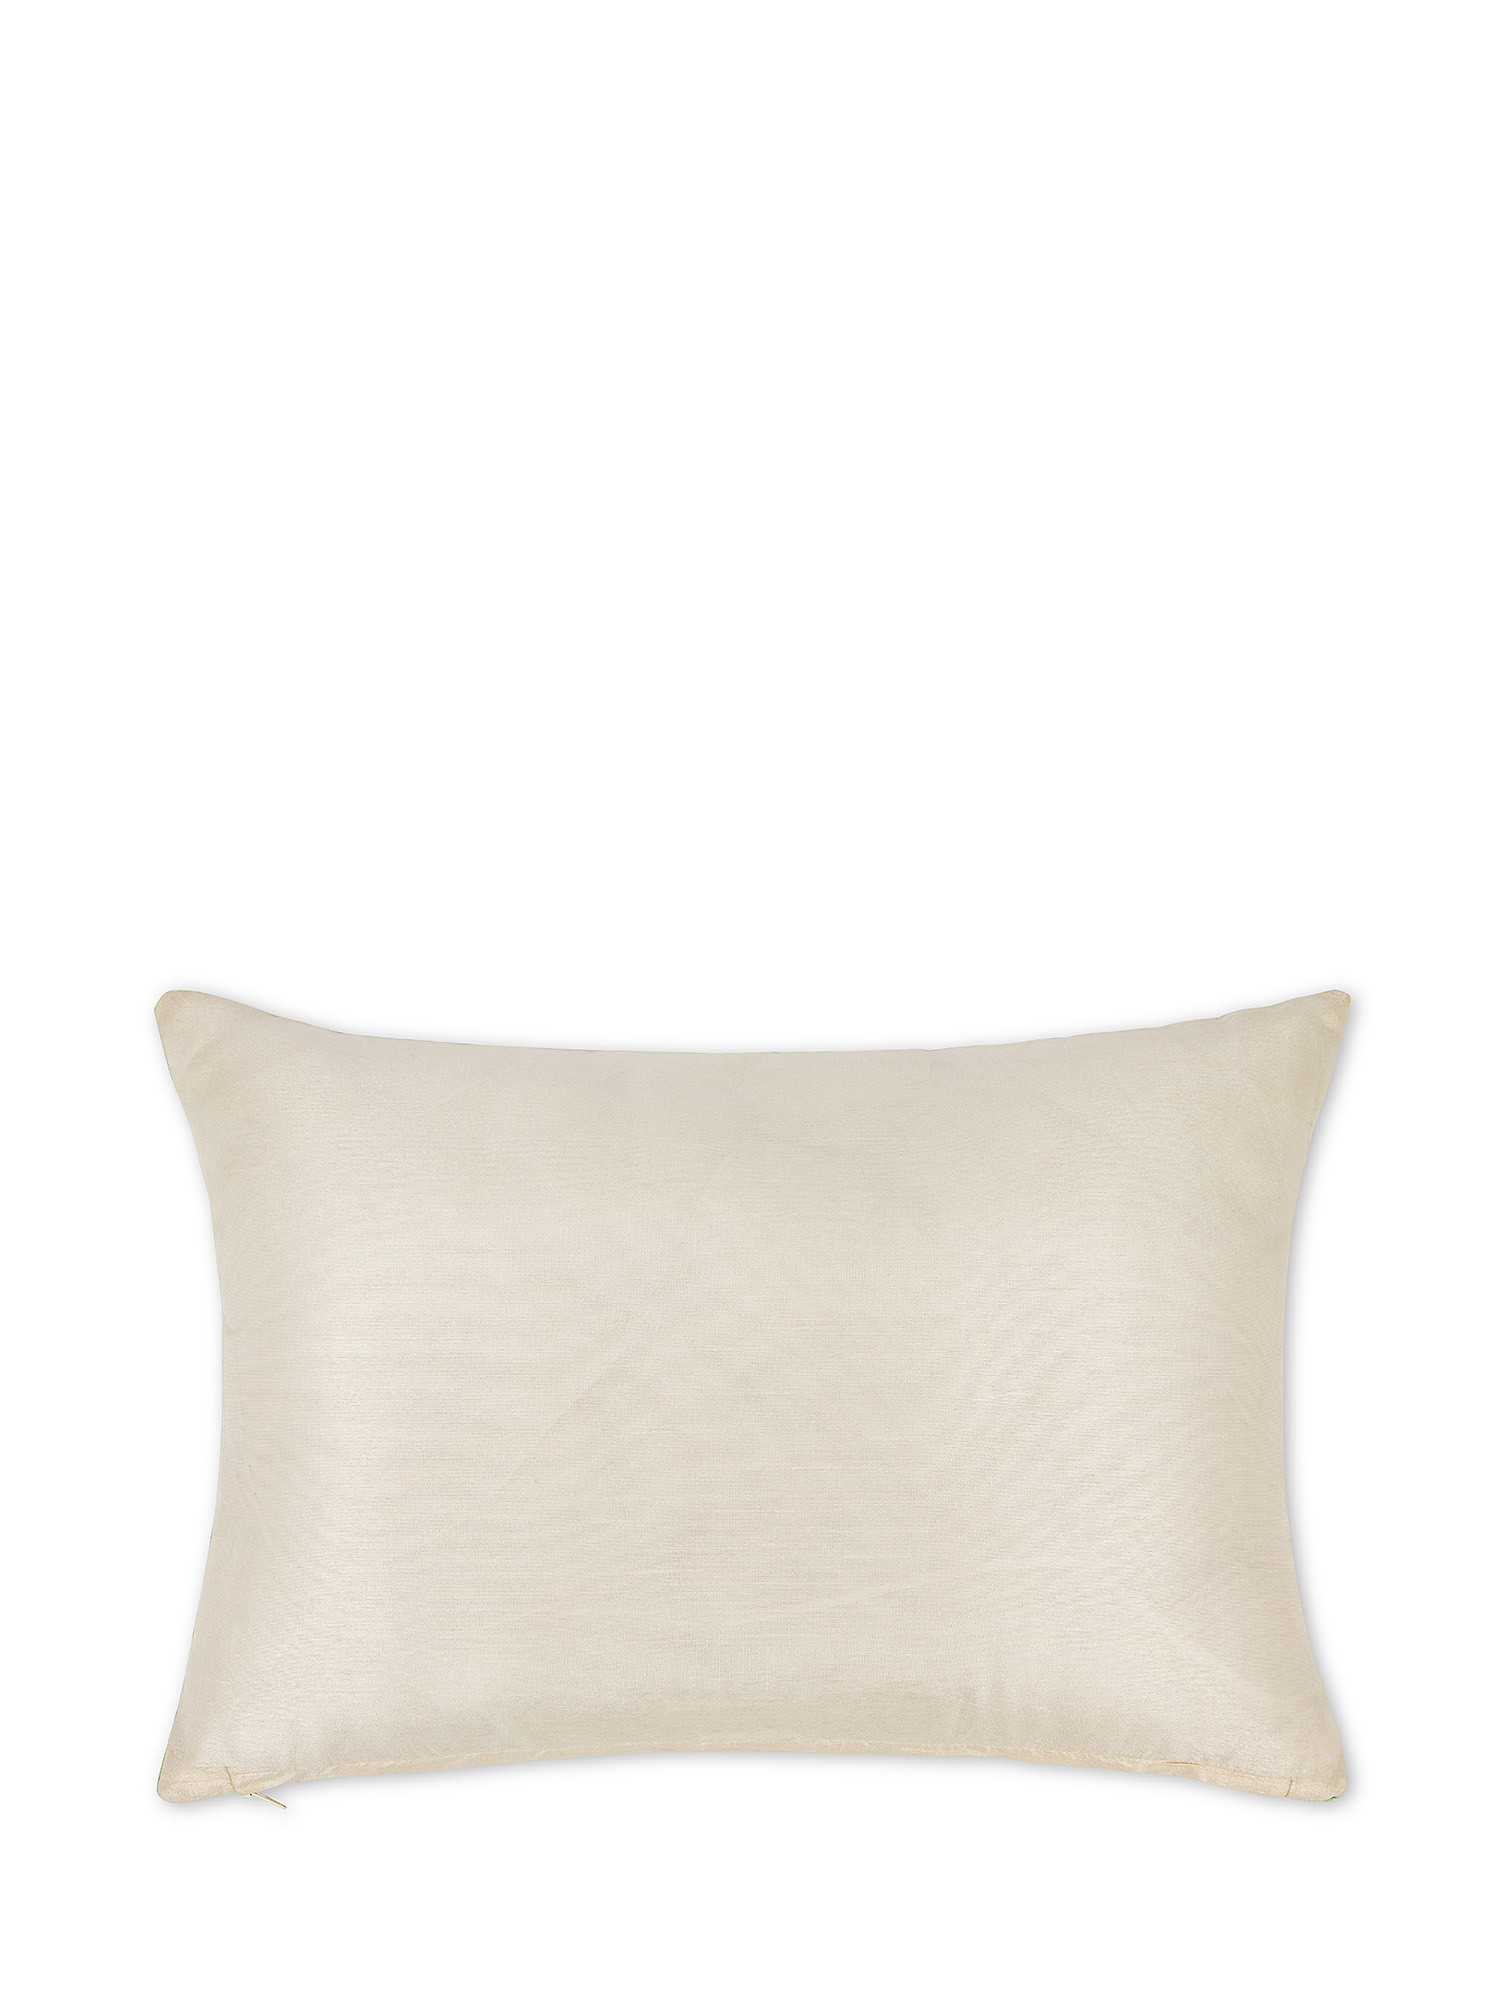 Ikat print silk cushion 35x50cm, Teal, large image number 1